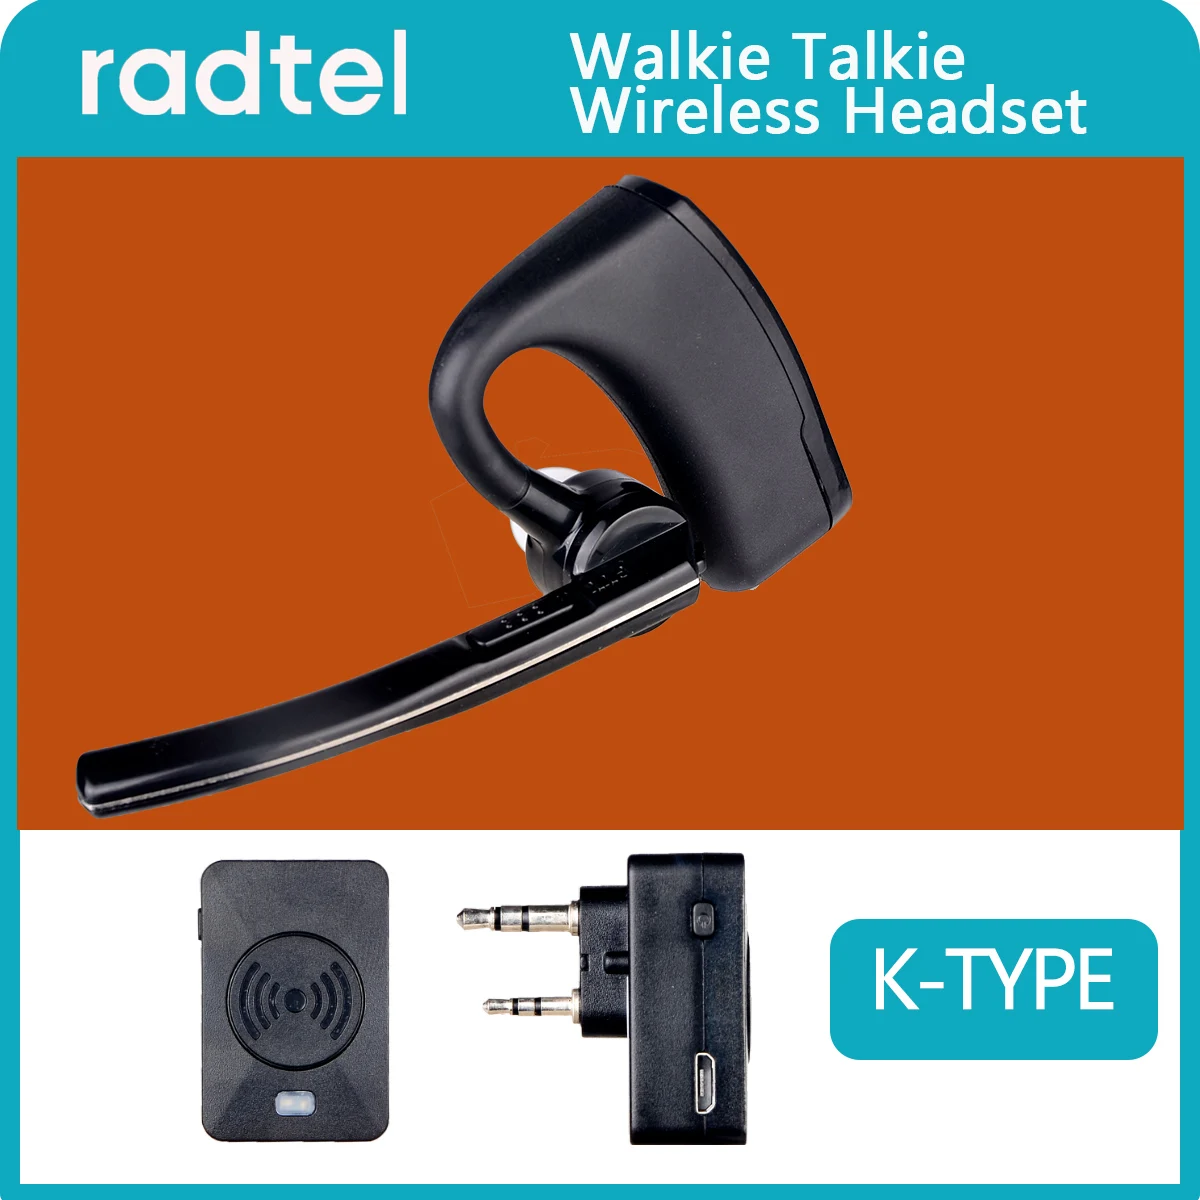 Walkie talkie Bluetooth-Compatible Headset Handsfree PTT Earpiece Headphone for Radtel RT-490 RT-830 RT-470 RT-470X RT-890RT12